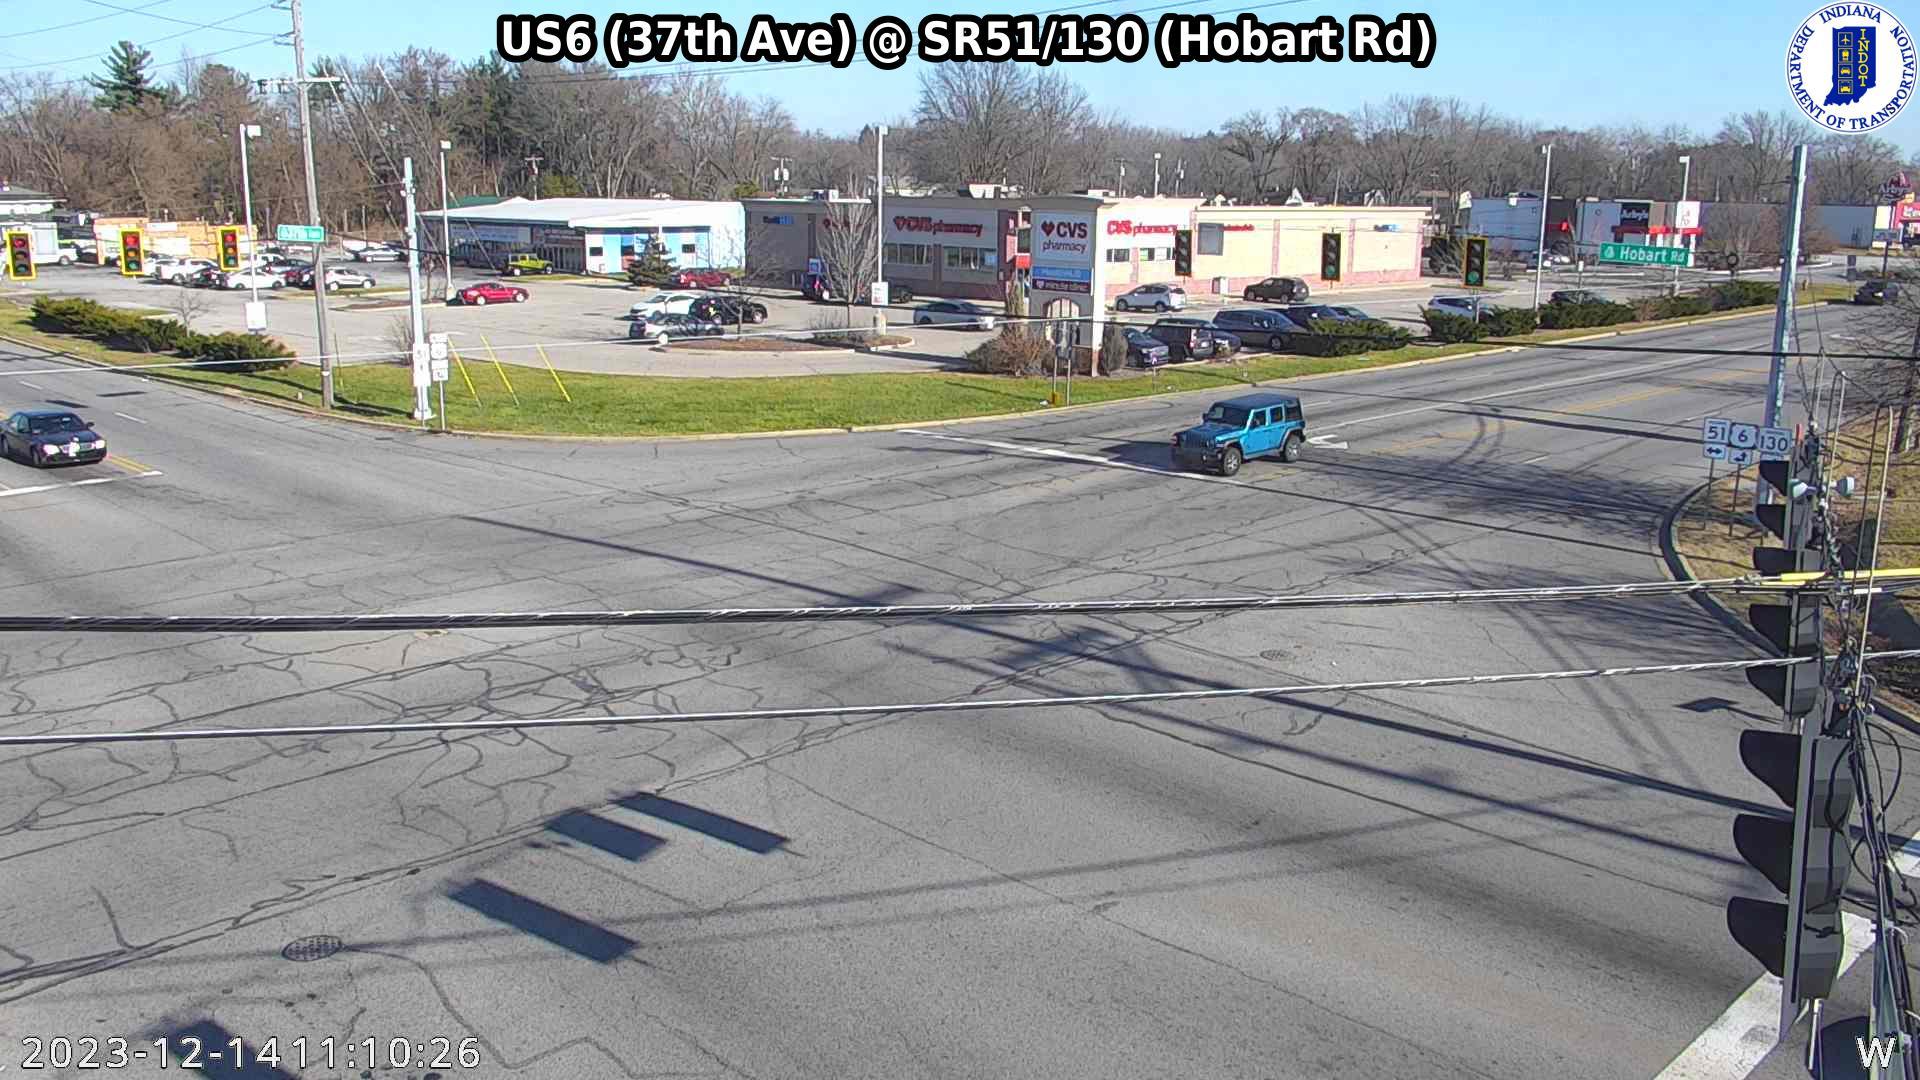 Traffic Cam Hobart: SIGNAL: US6 (37th Ave) @ SR51/130 - Rd